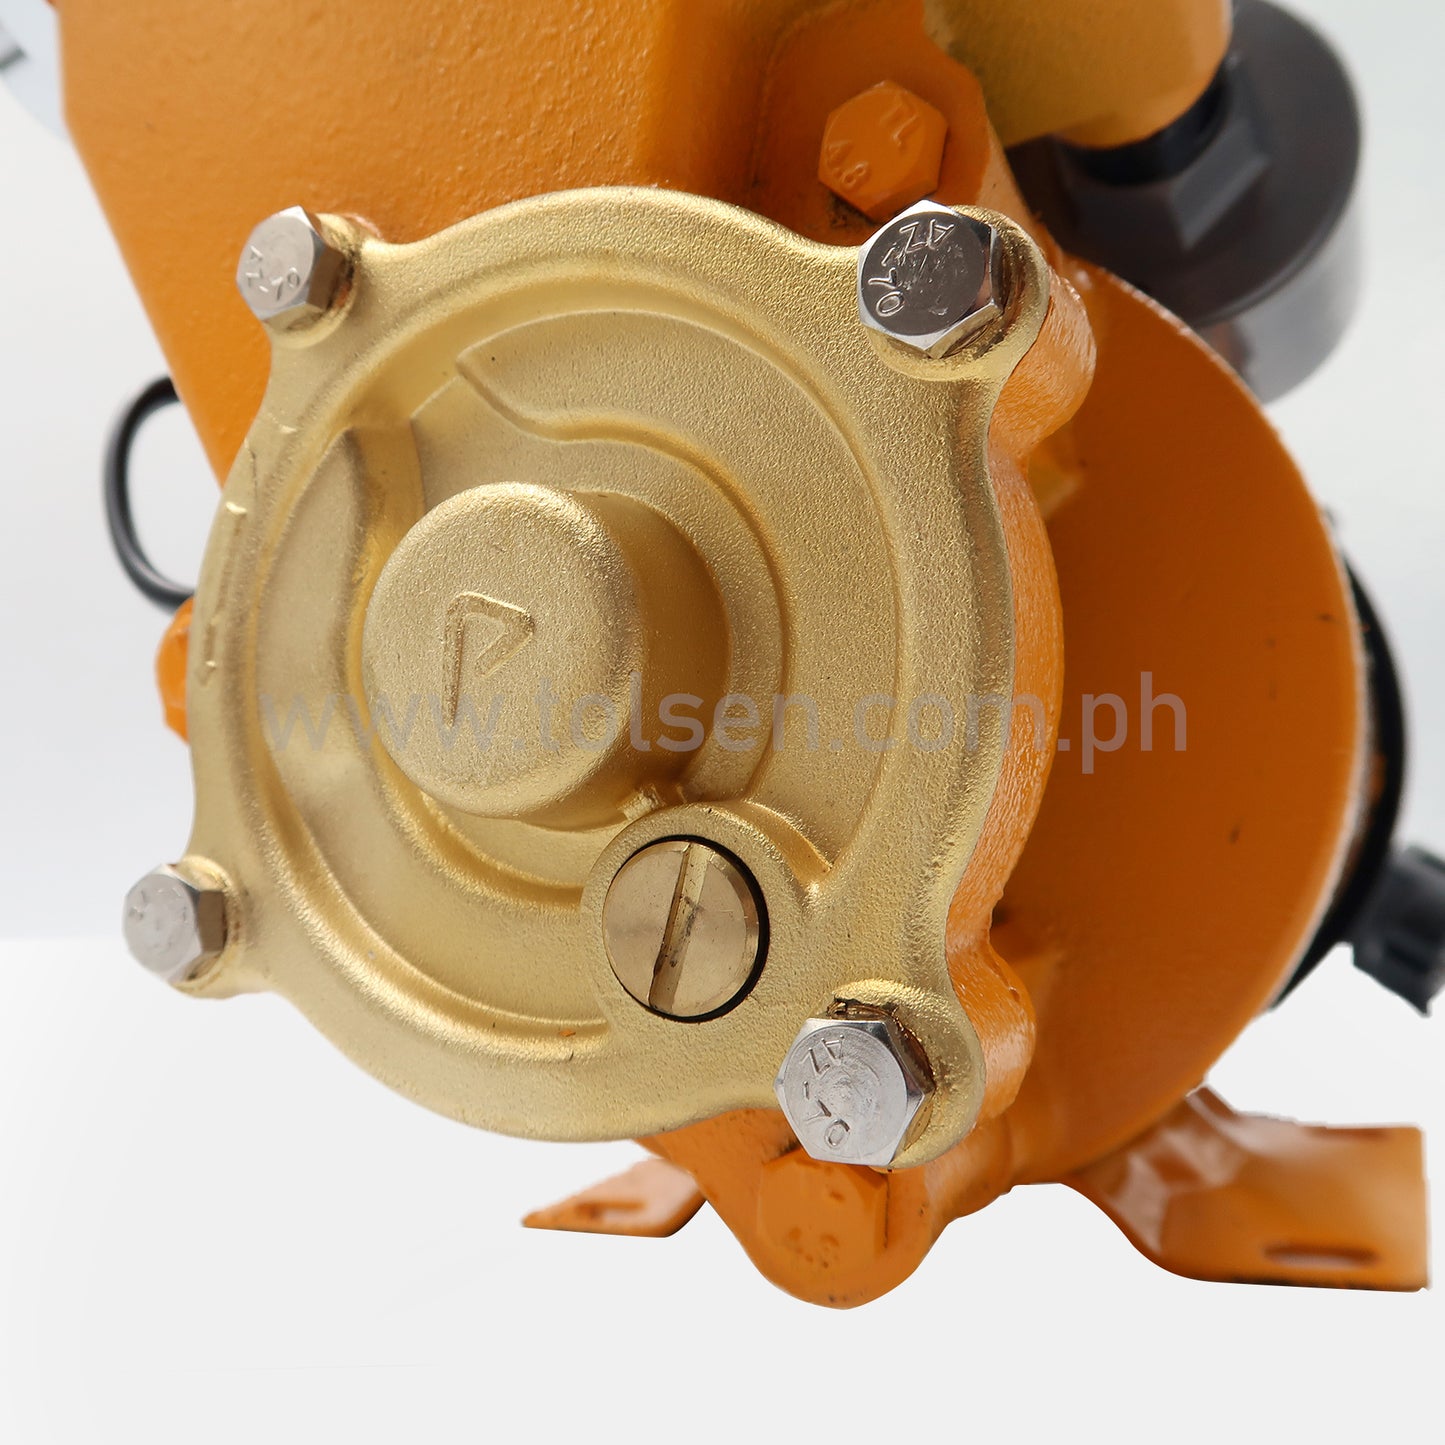 Automatic Self Priming Peripheral Water Pump (370W, 1/2HP) Copper Motor